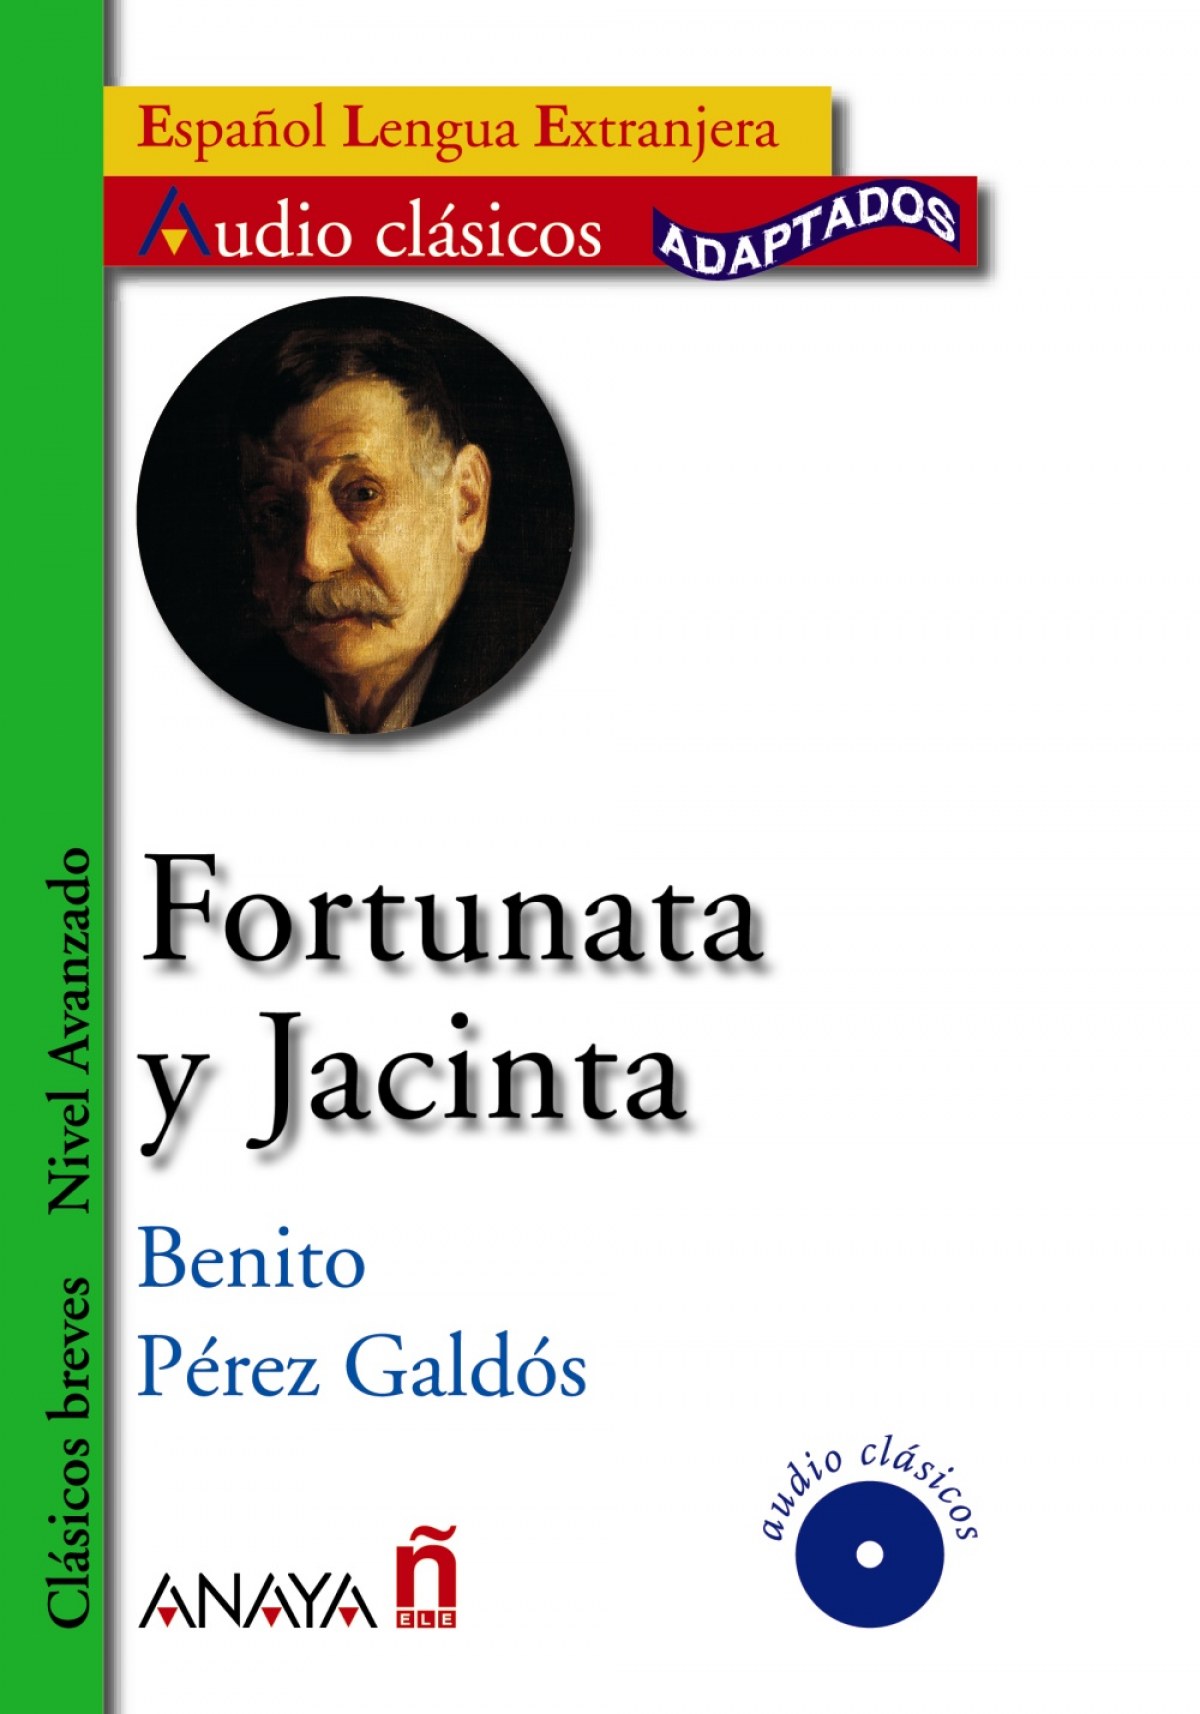 Fortunata y Jacinta - Pérez Galdós, Benito